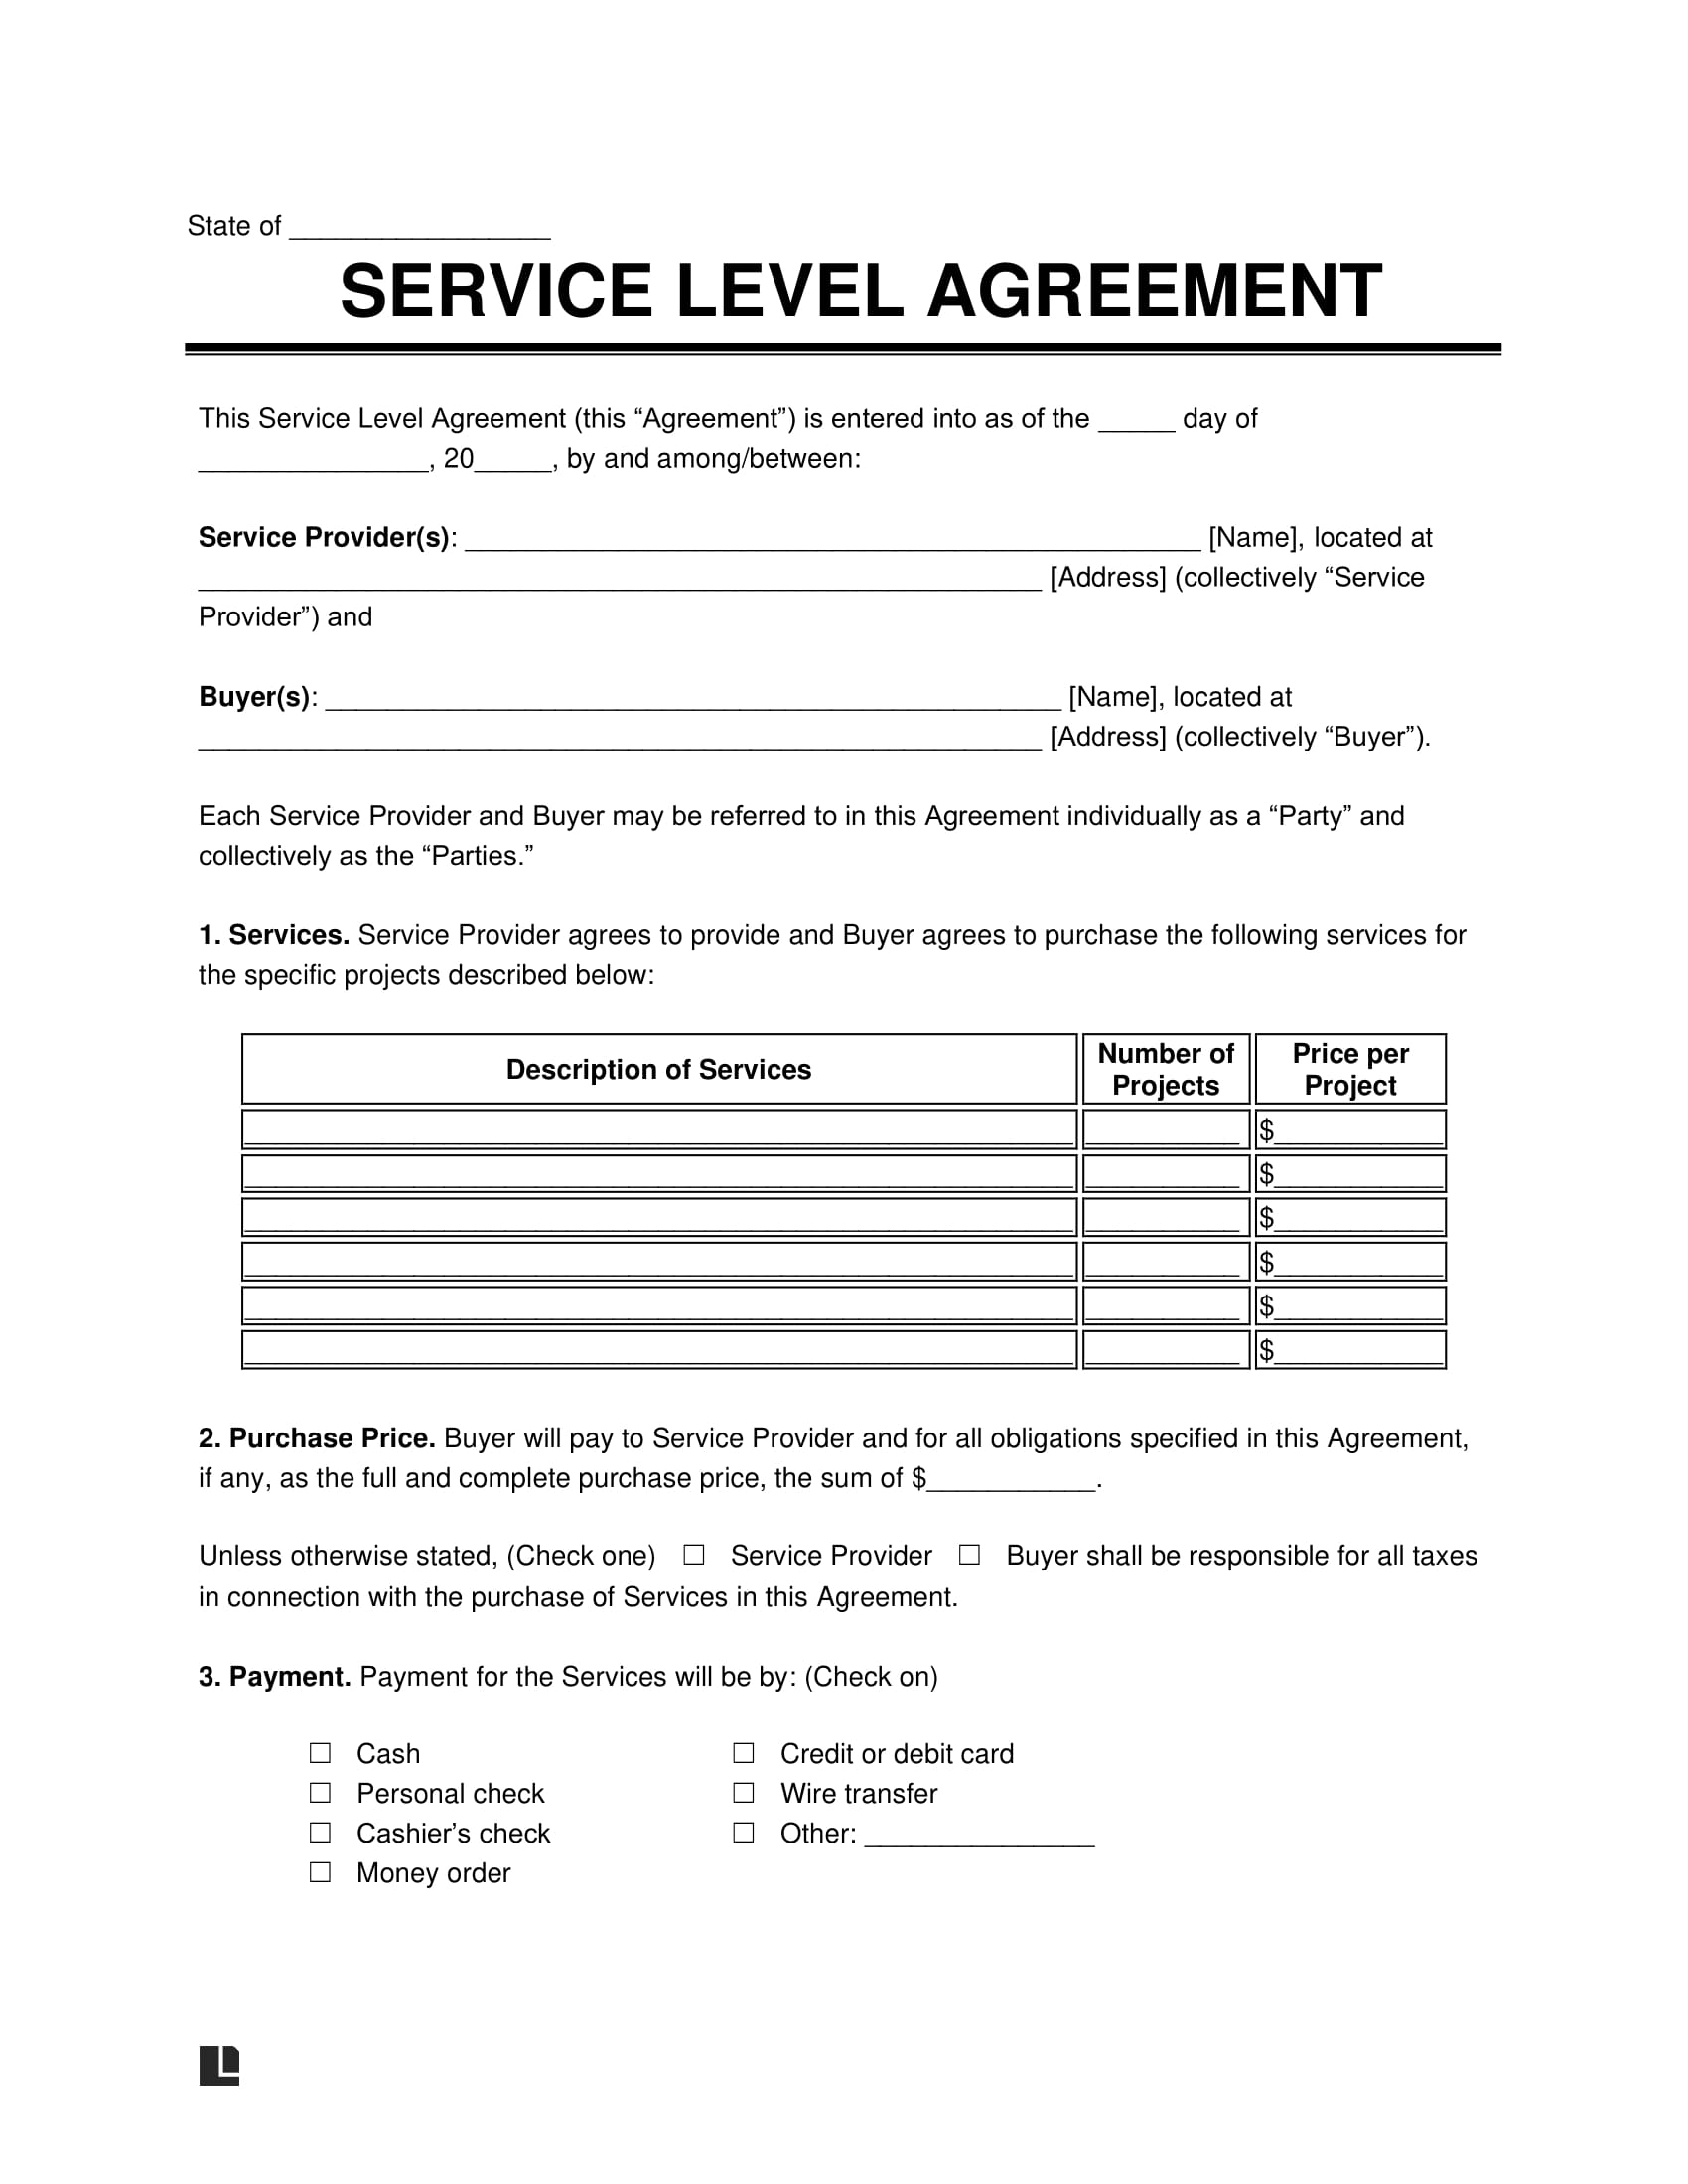 Service Level Agreement screenshot